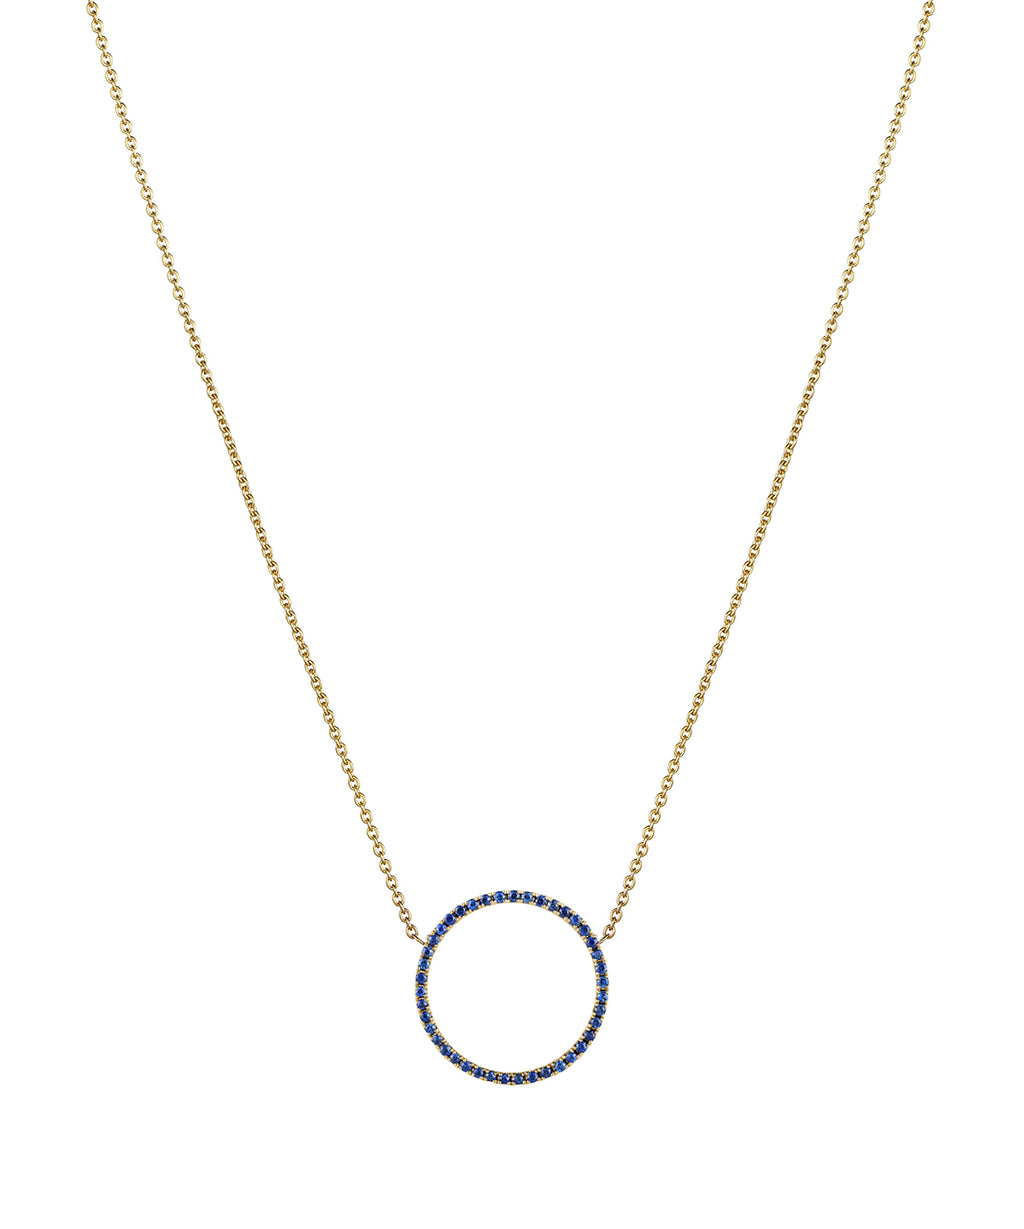 16mm blue sapphire circle pendant 18ct yellow gold